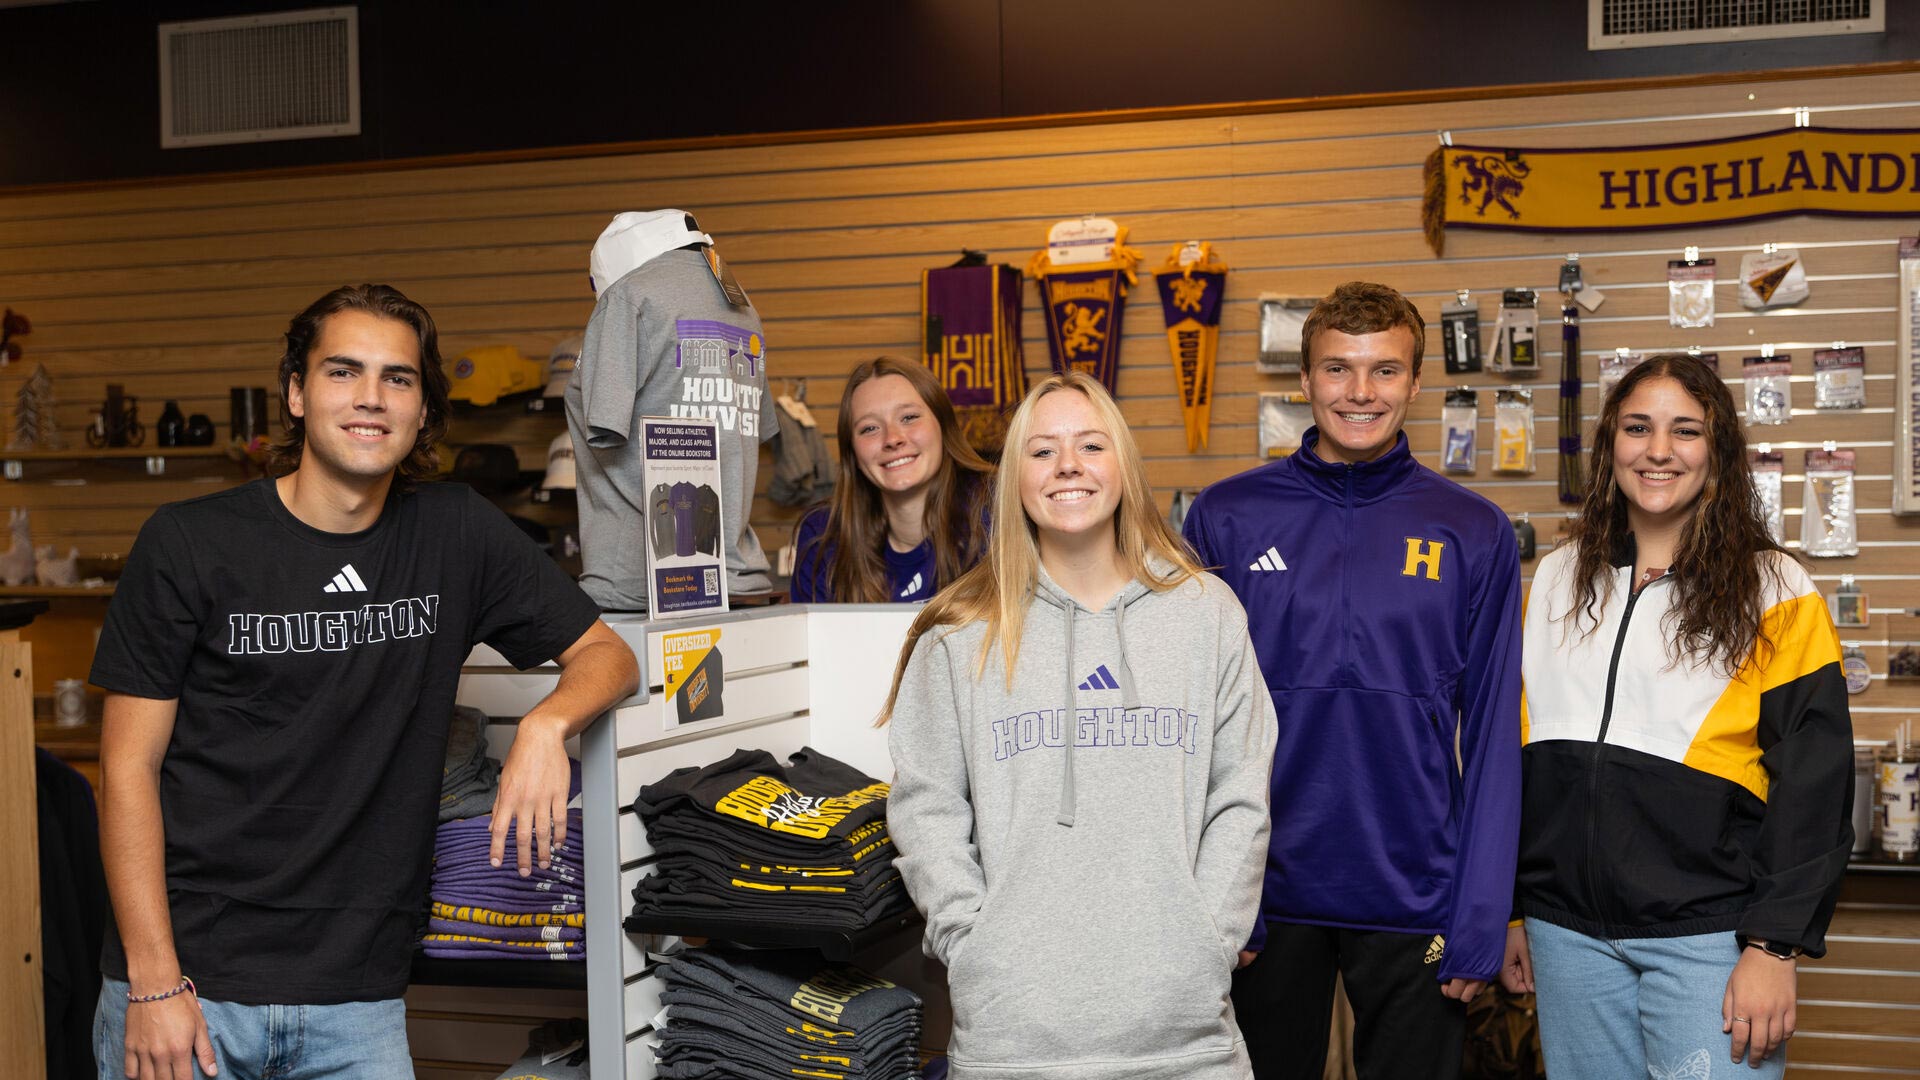 Five Houghton students wearing Houghton Highlander gear standing in the Highlander Shop.